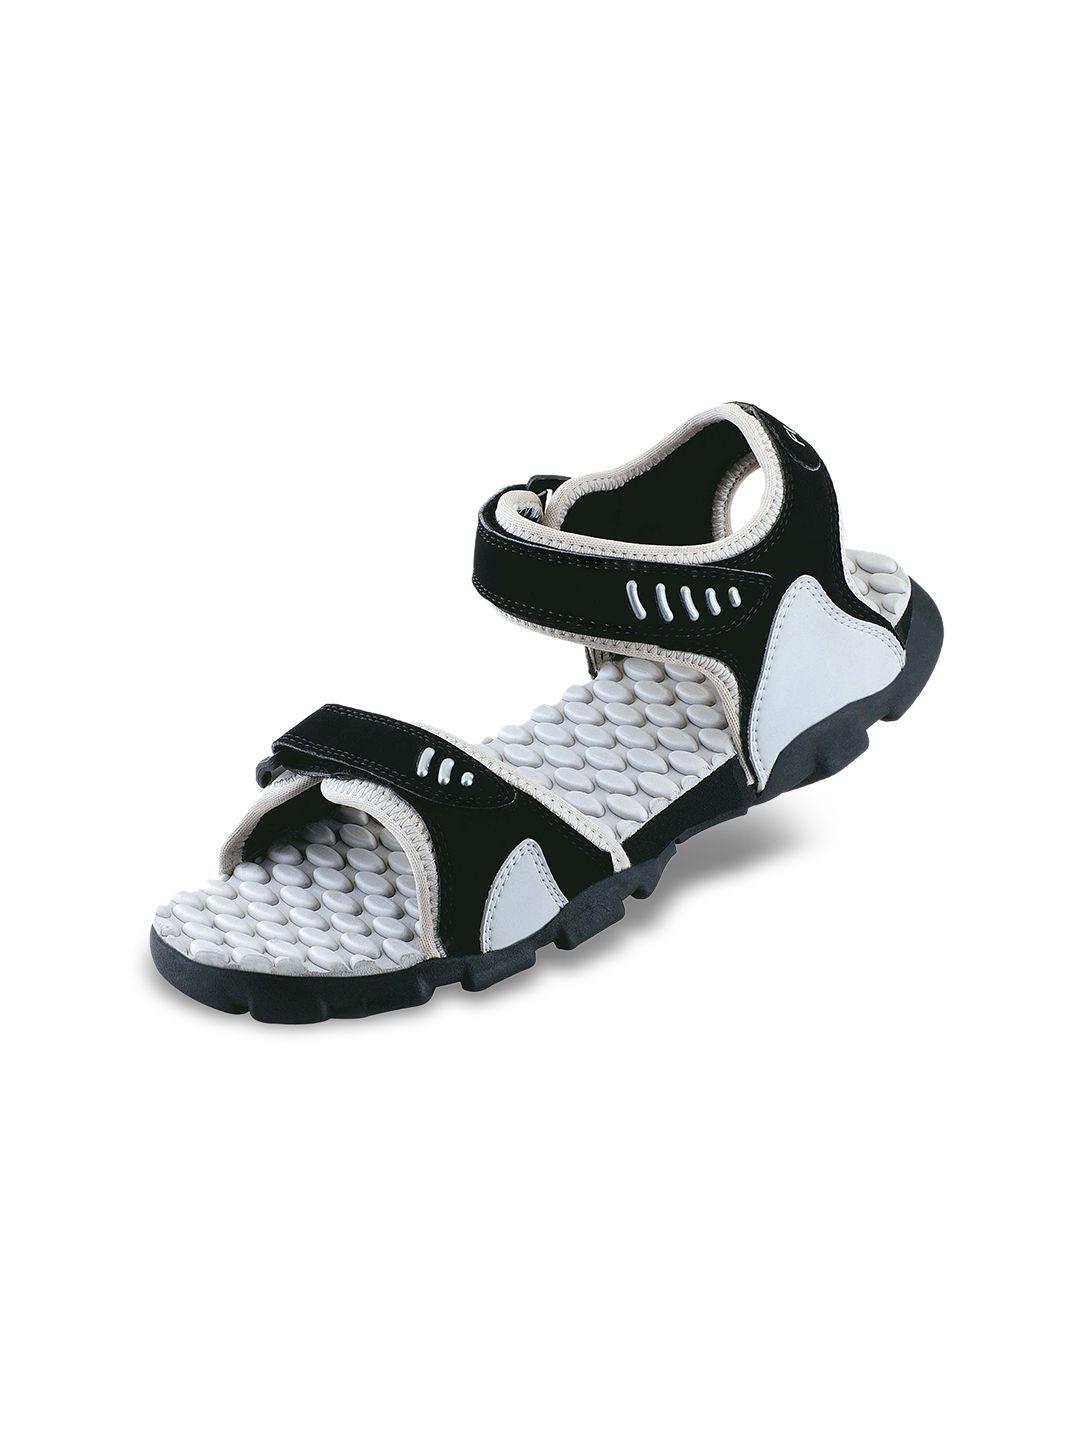 sparx women black & grey sports sandals